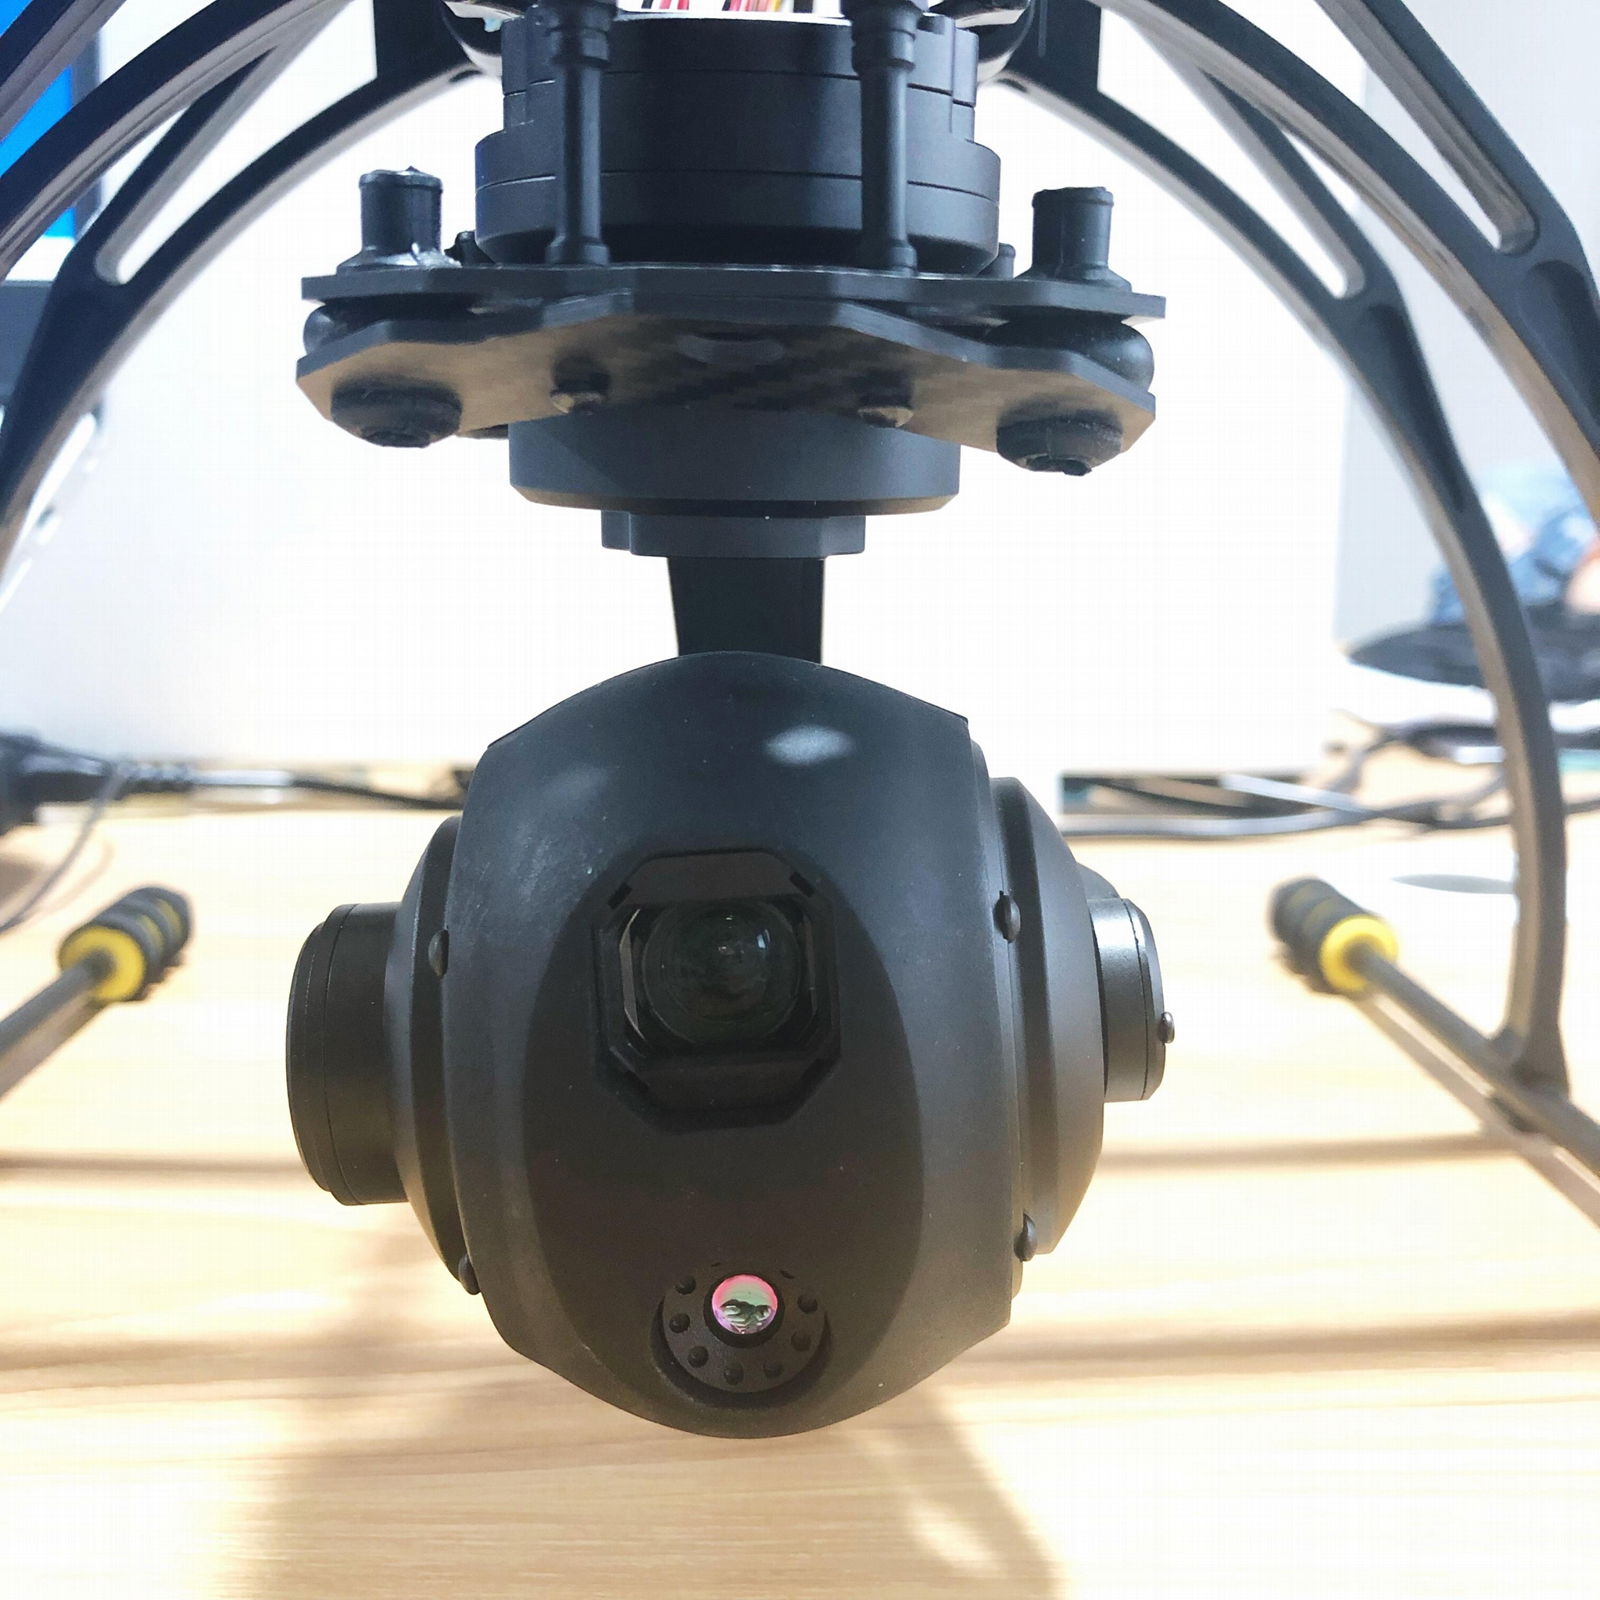 5X dual sensors zoom gimbal camera for uav with thermal imager   2